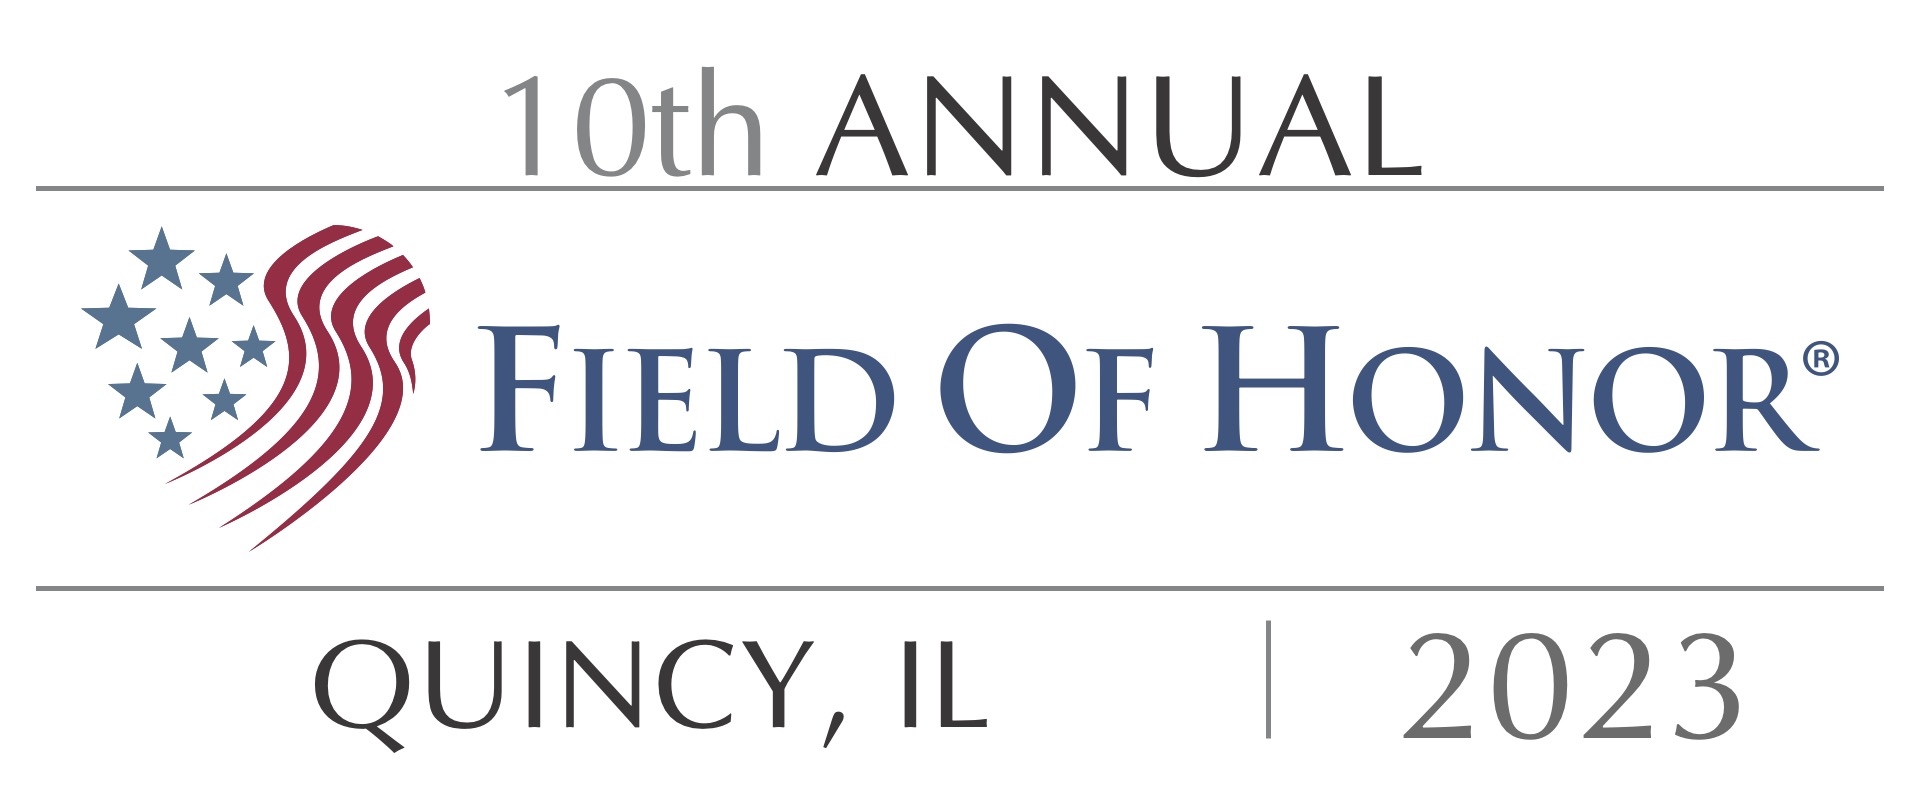 Field of Honor logo